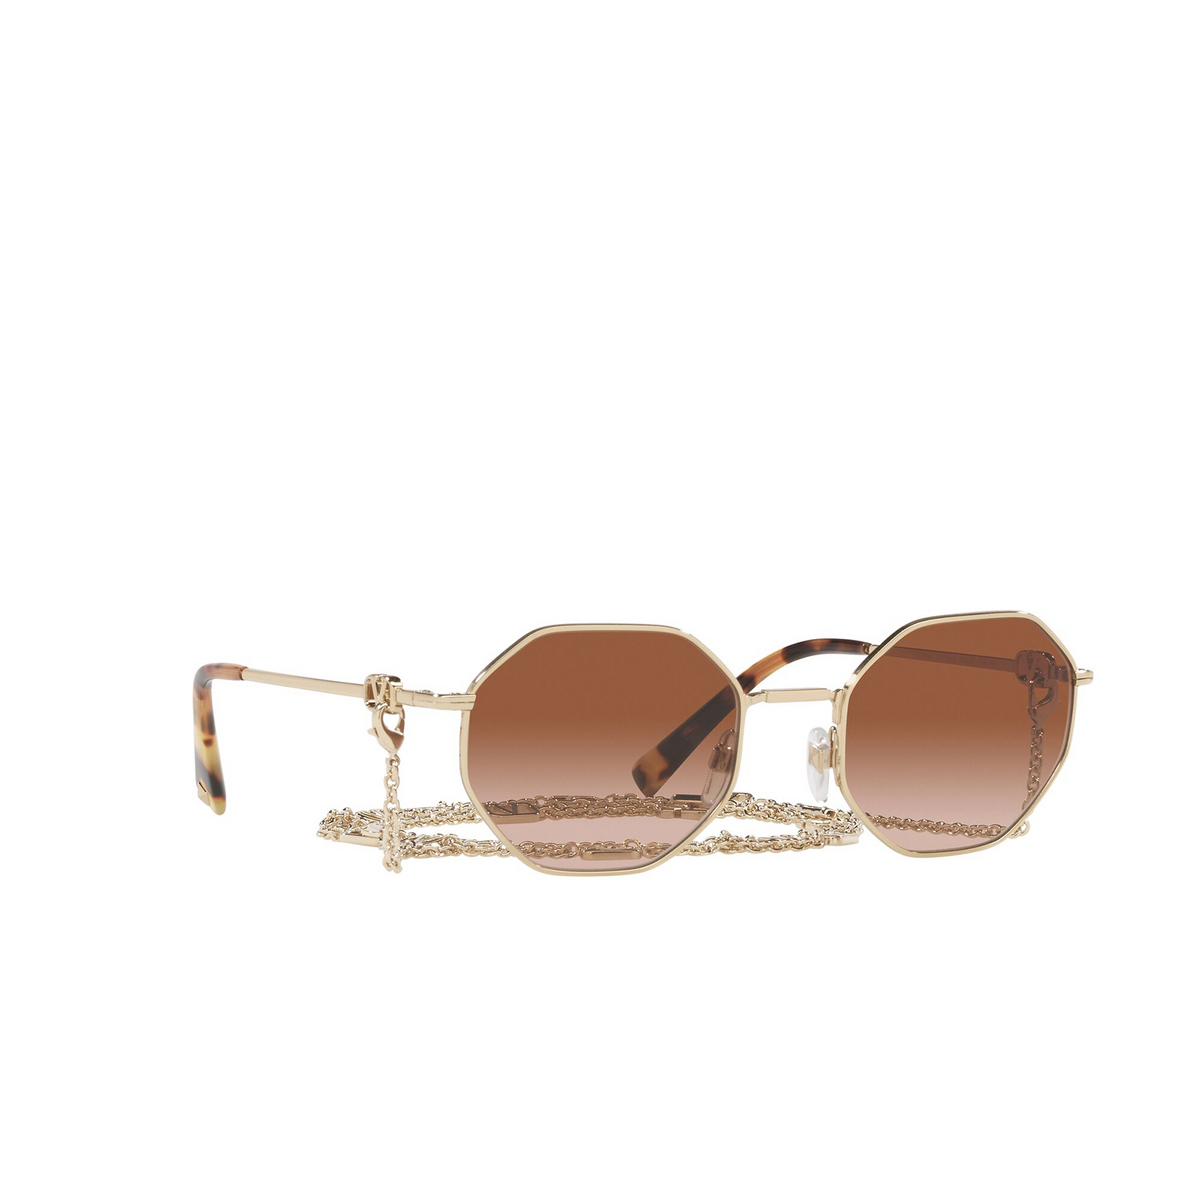 Valentino® Sunglasses: VA2040 color Light Gold 307213 - front view.